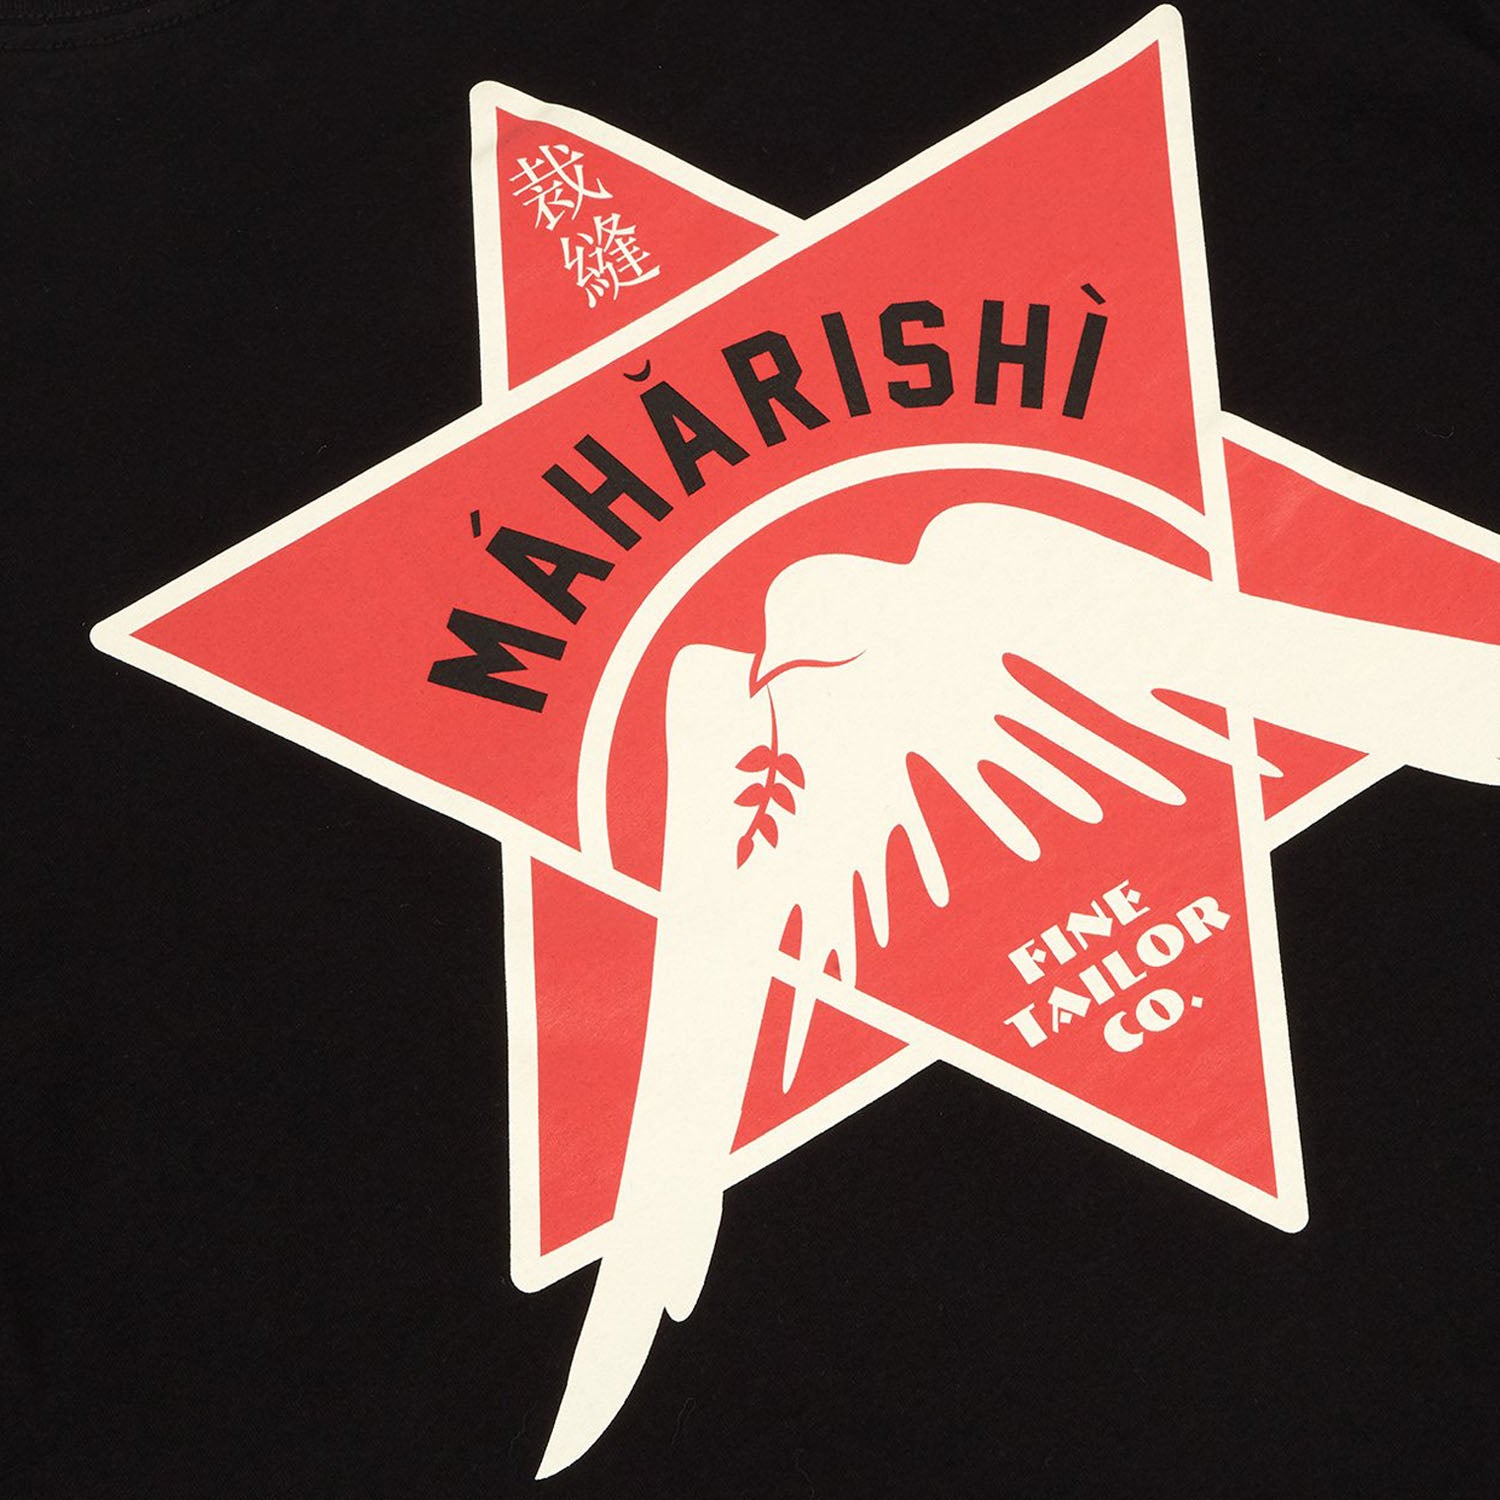 Maharishi Fine Tailor T-Shirt Organic Jersey 190 Black